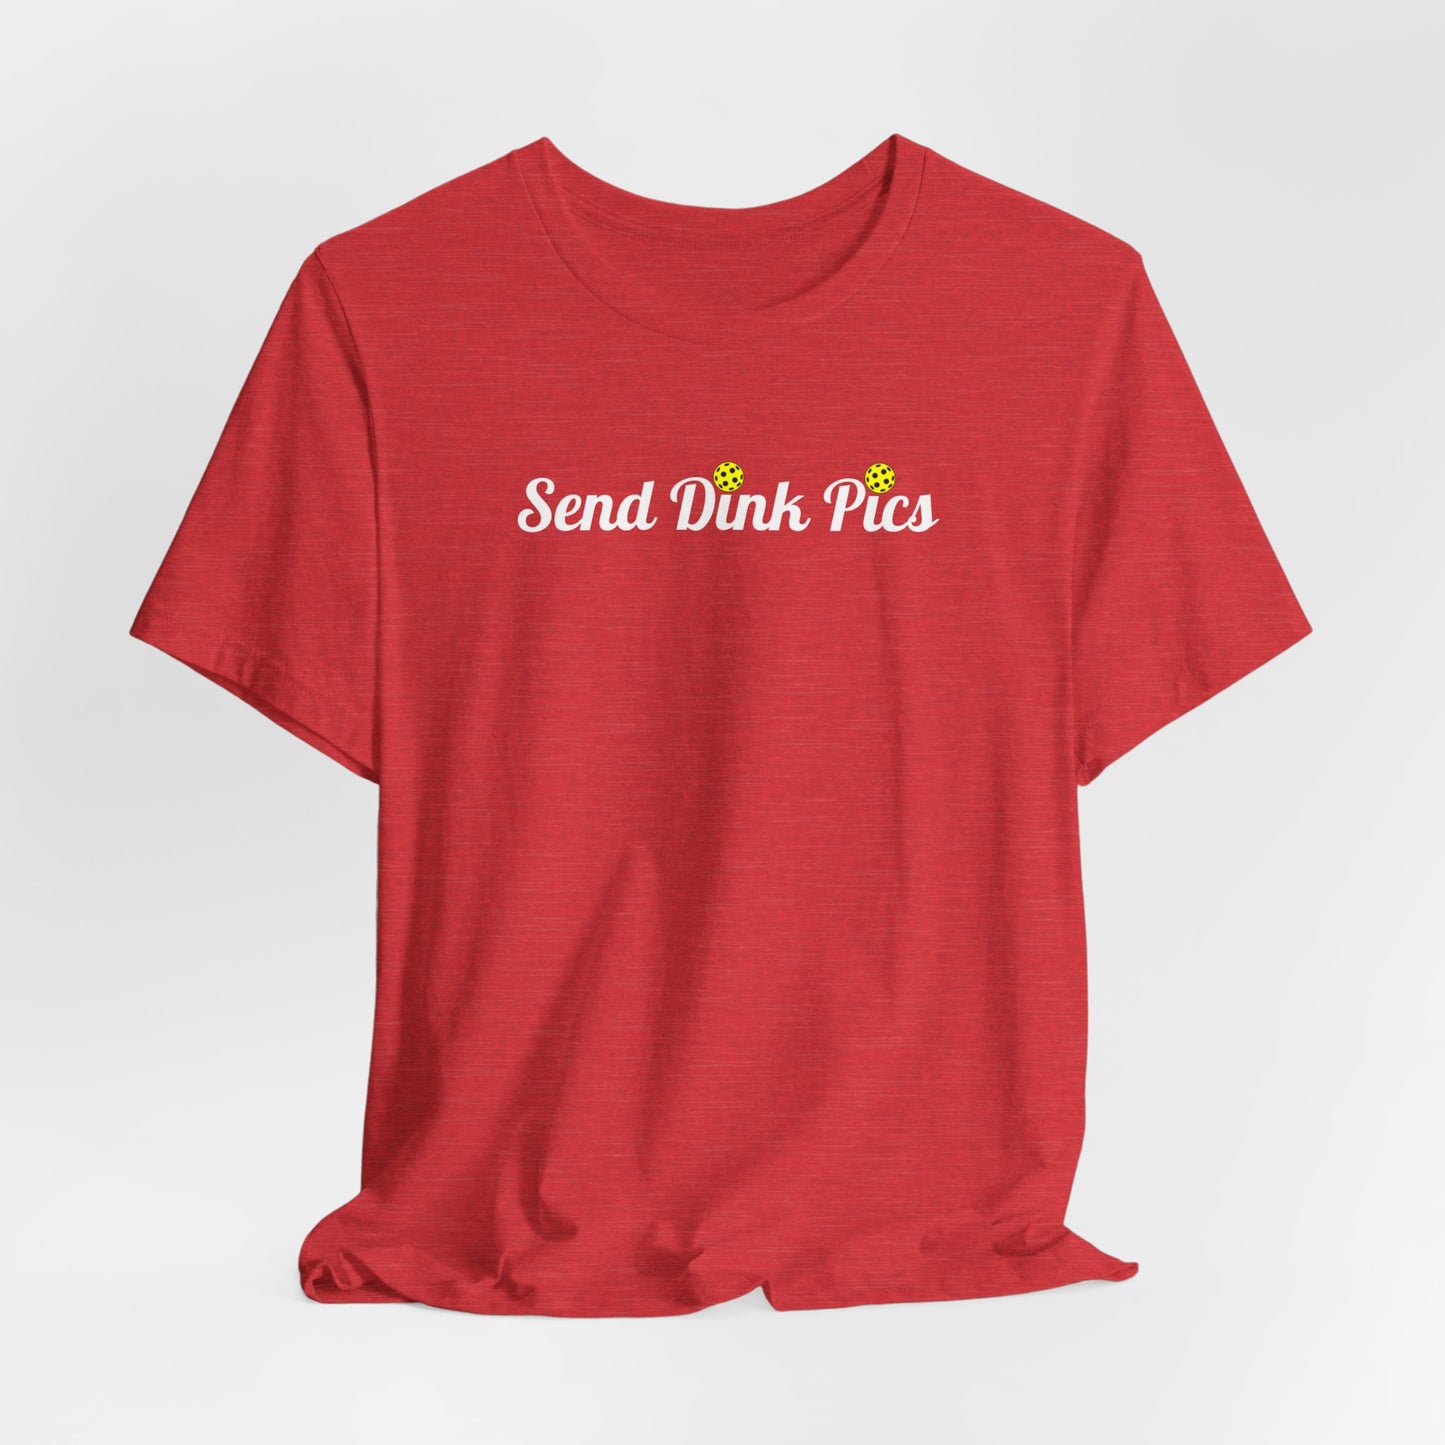 Funny, cute pickleball premium quality t-shirt that says "Send Dink Pics"